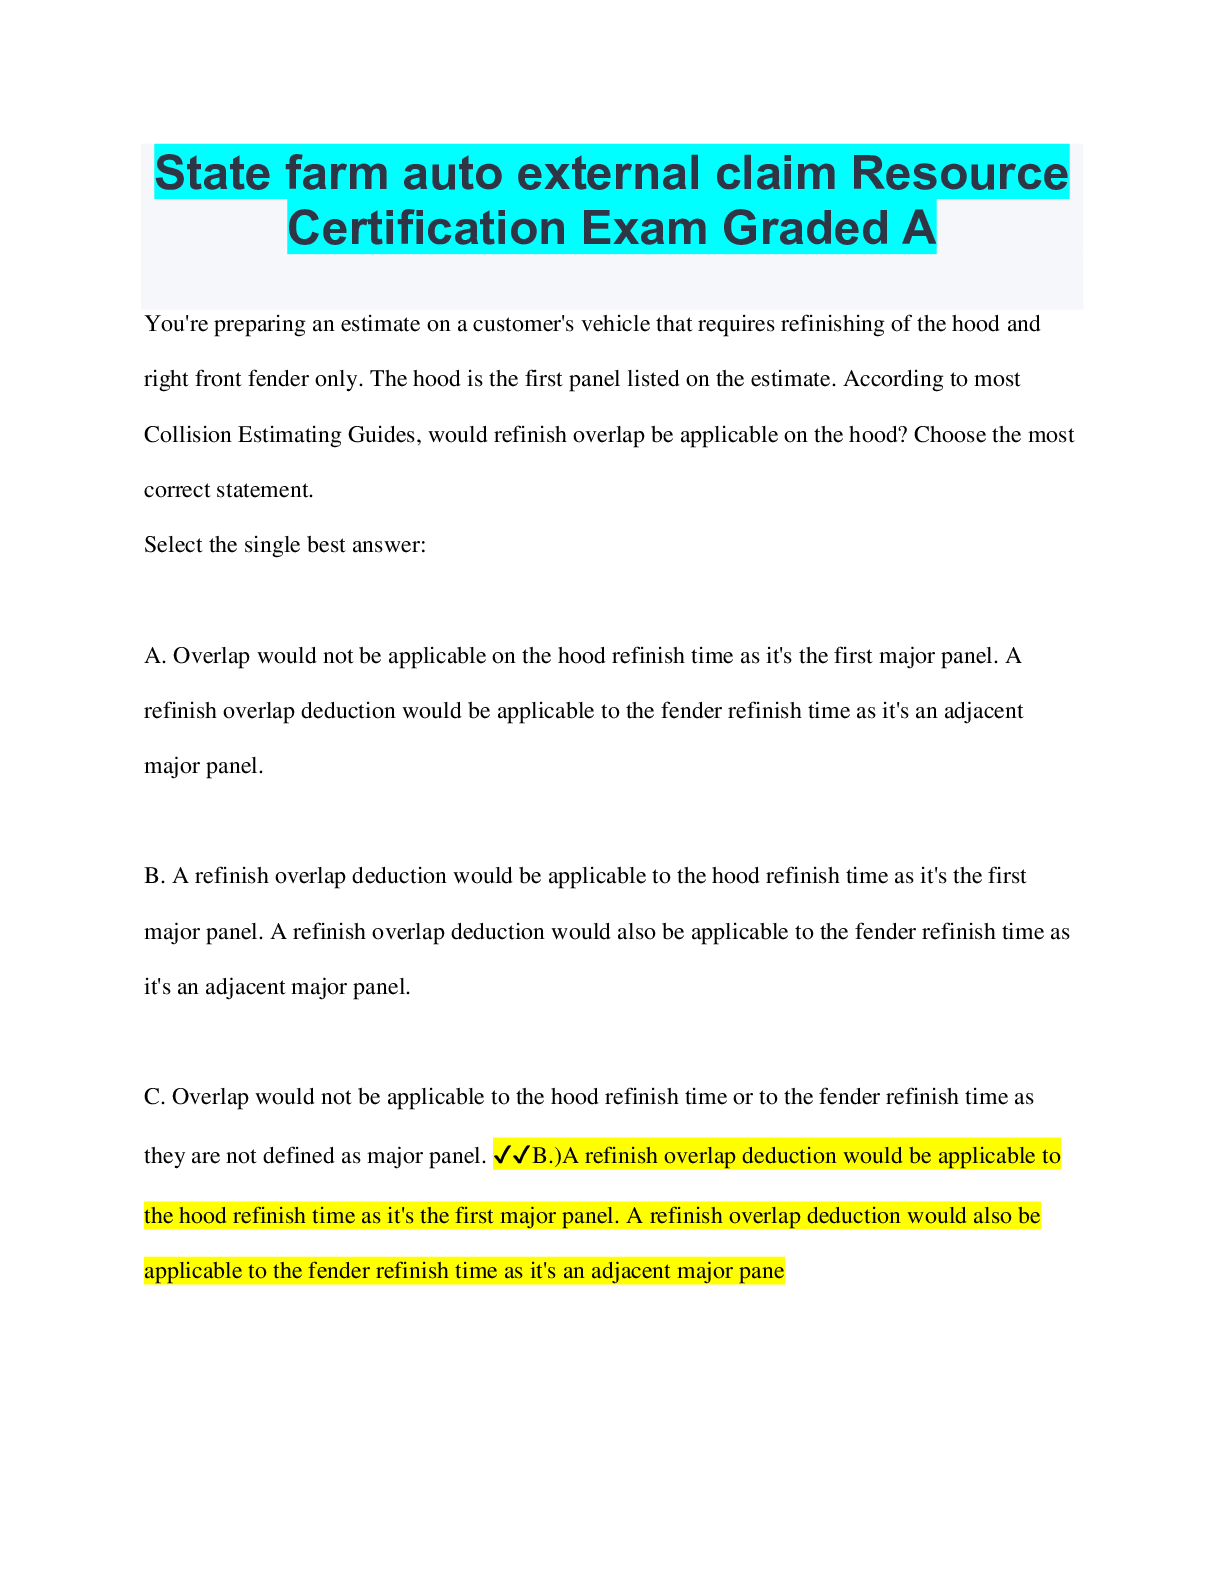 State farm auto external claim Resource Certification Exam Graded A